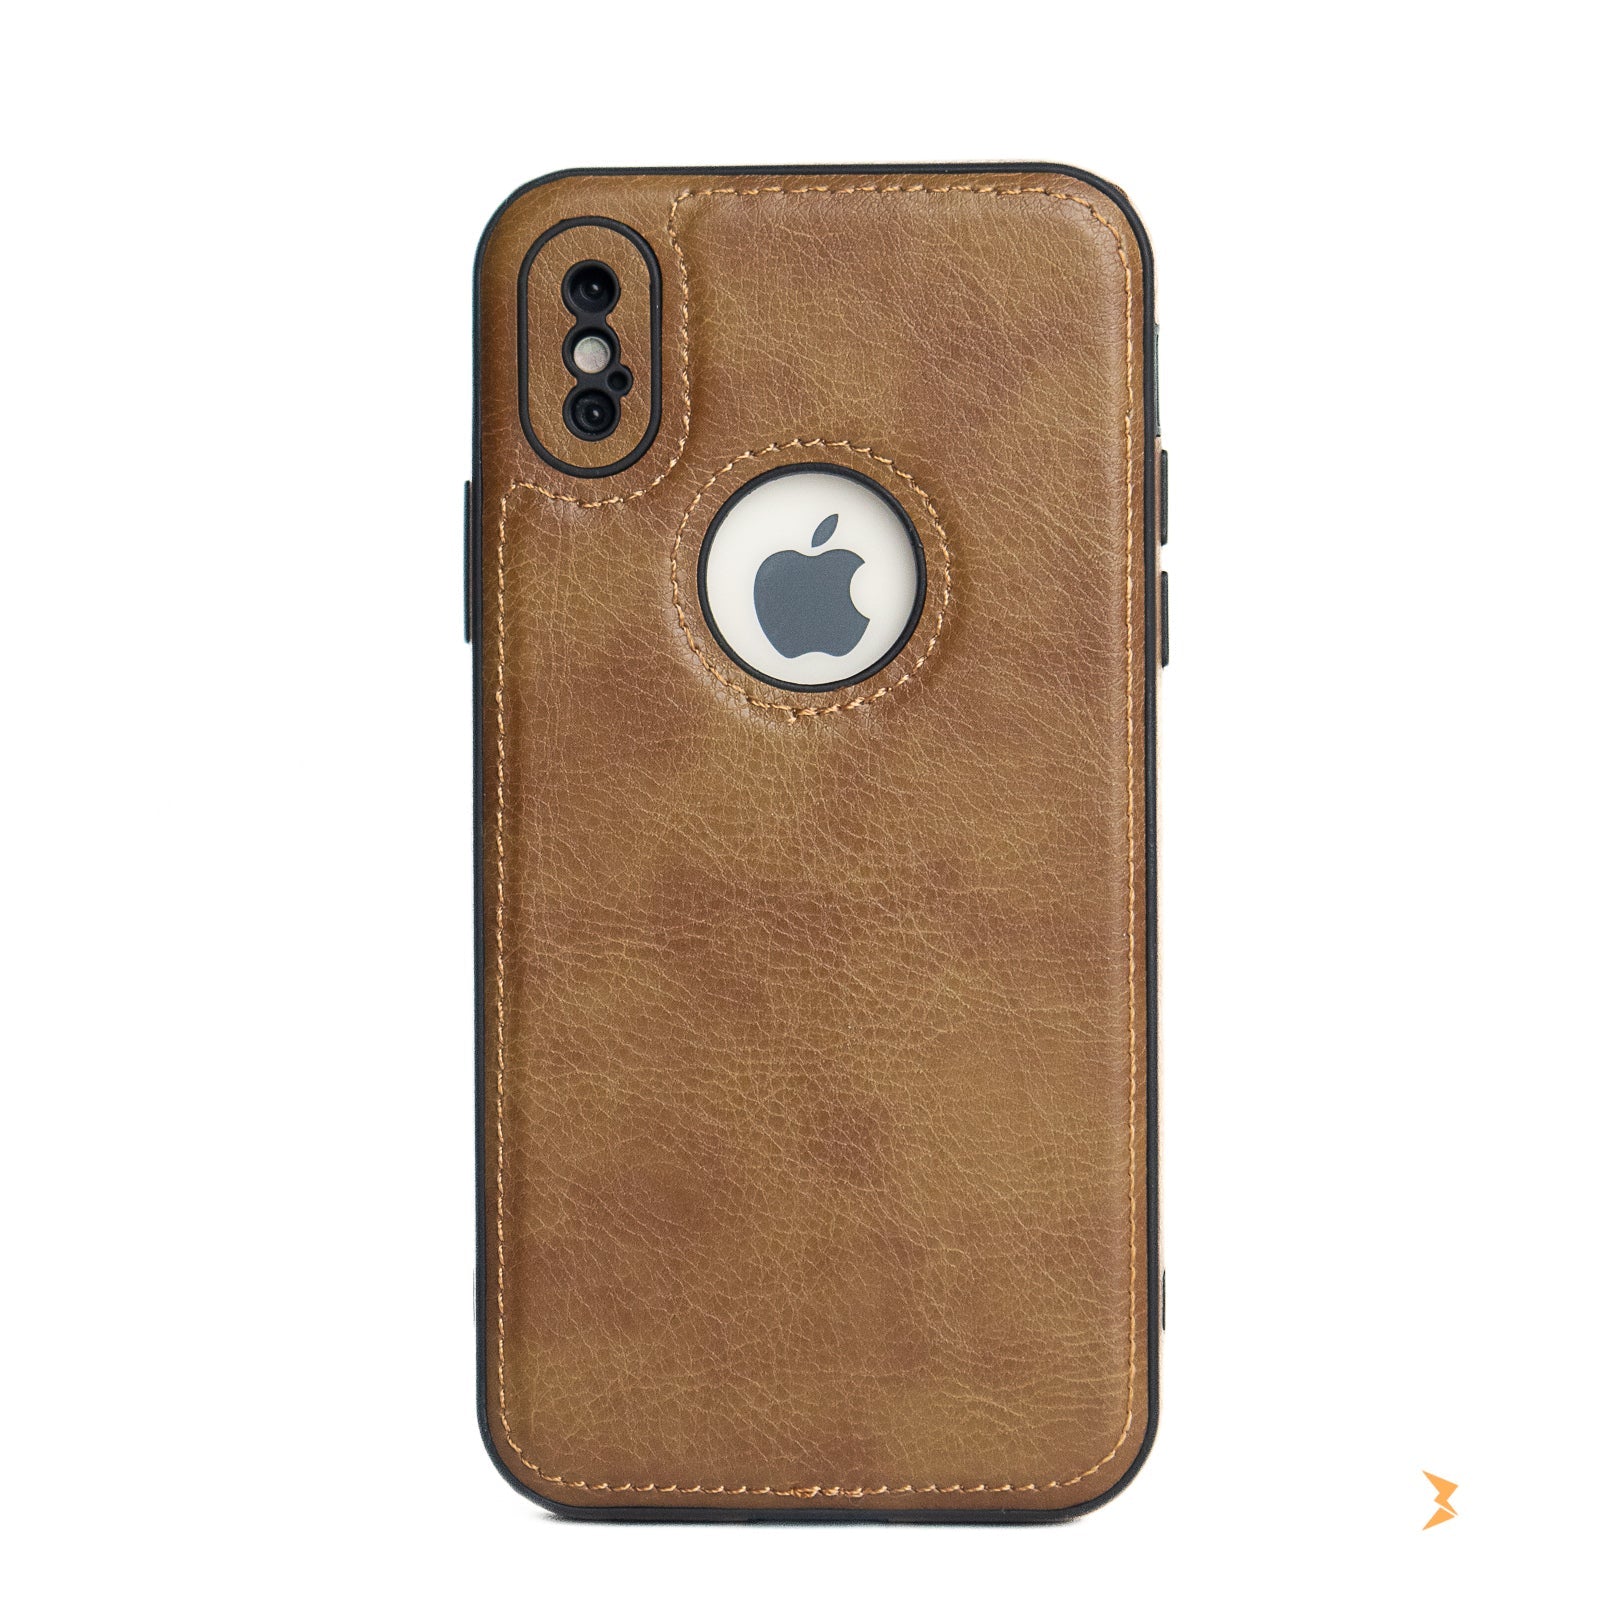 Prato Leather Case iPhone Xs Max